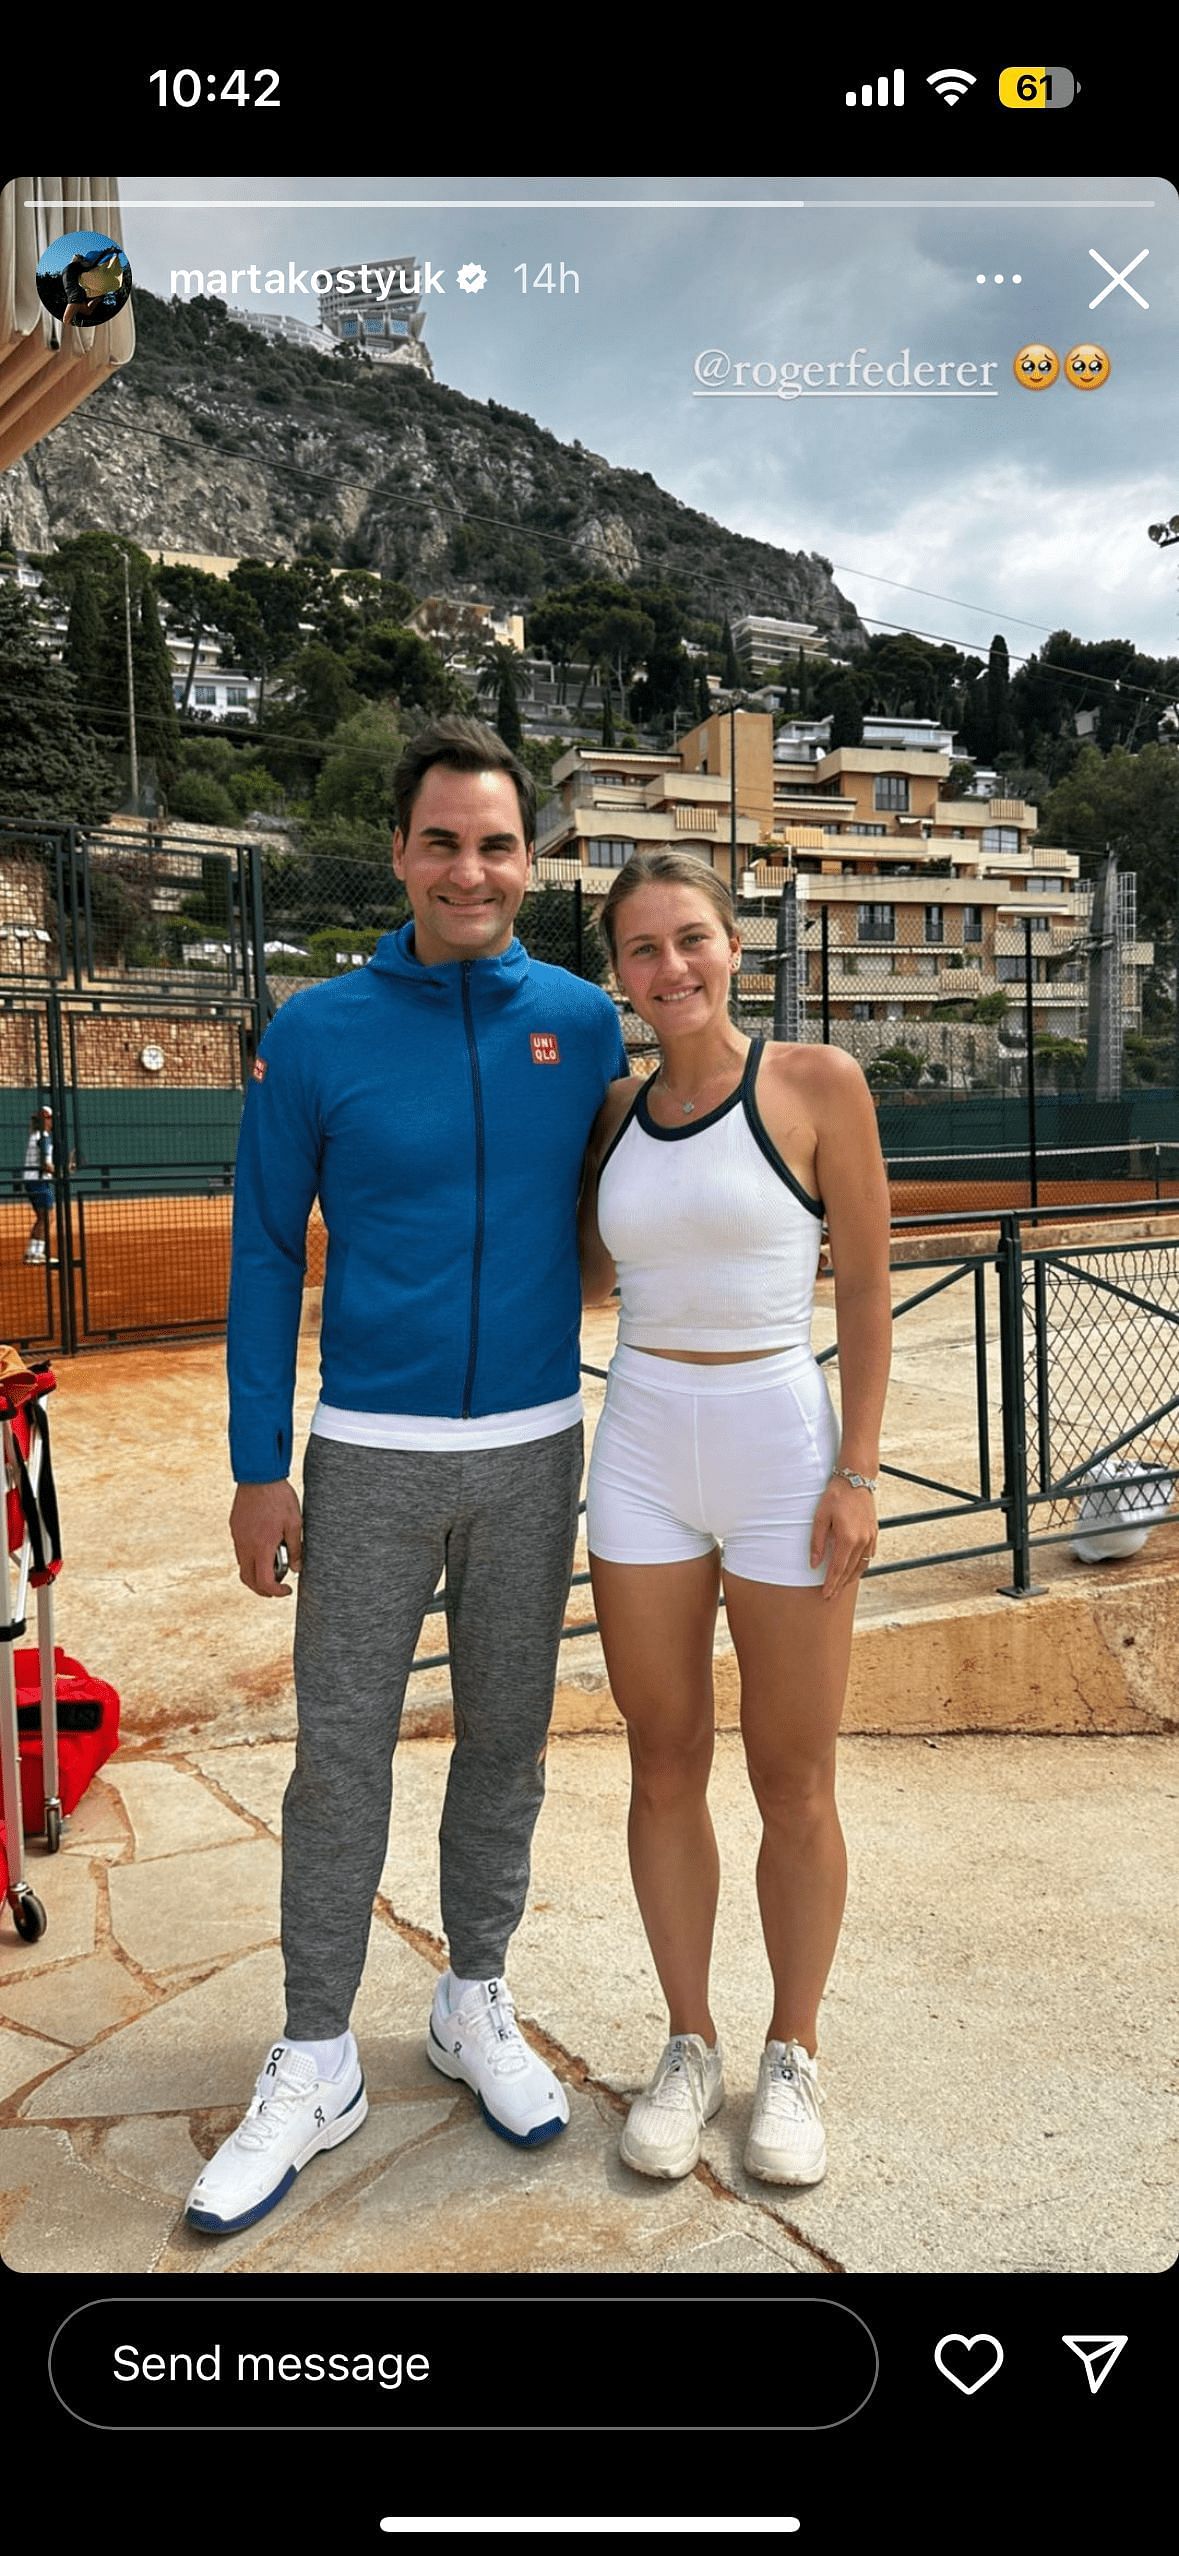 Marta Kostyuk reacts to meeting Roger Federer in Monaco